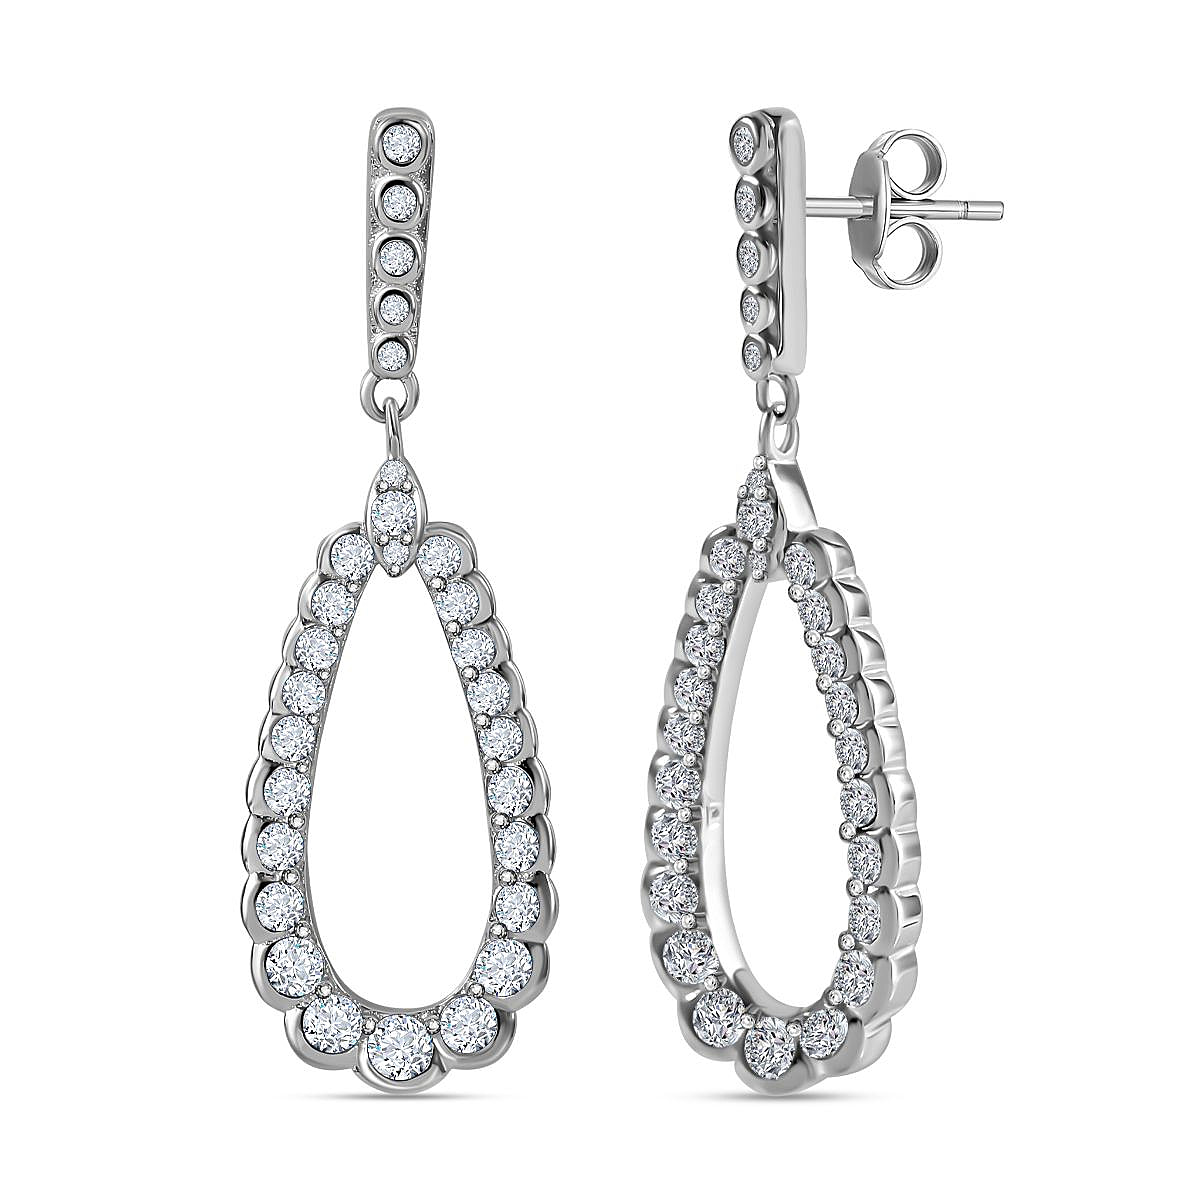 Cubic Zirconia Dangle Earrings in Rhodium Overlay Sterling Silver, Silver Wt. 5.00 Gms